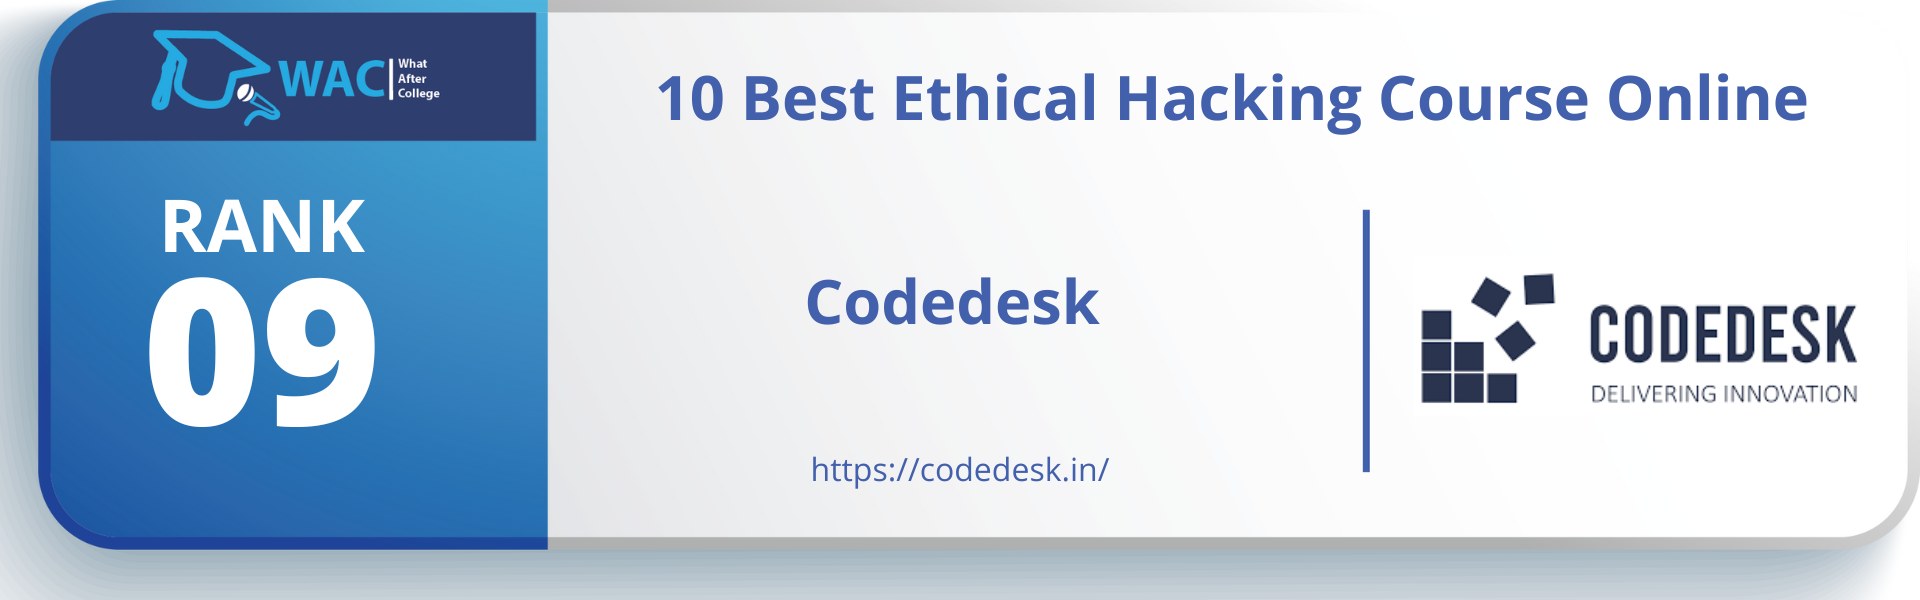 Codedesk